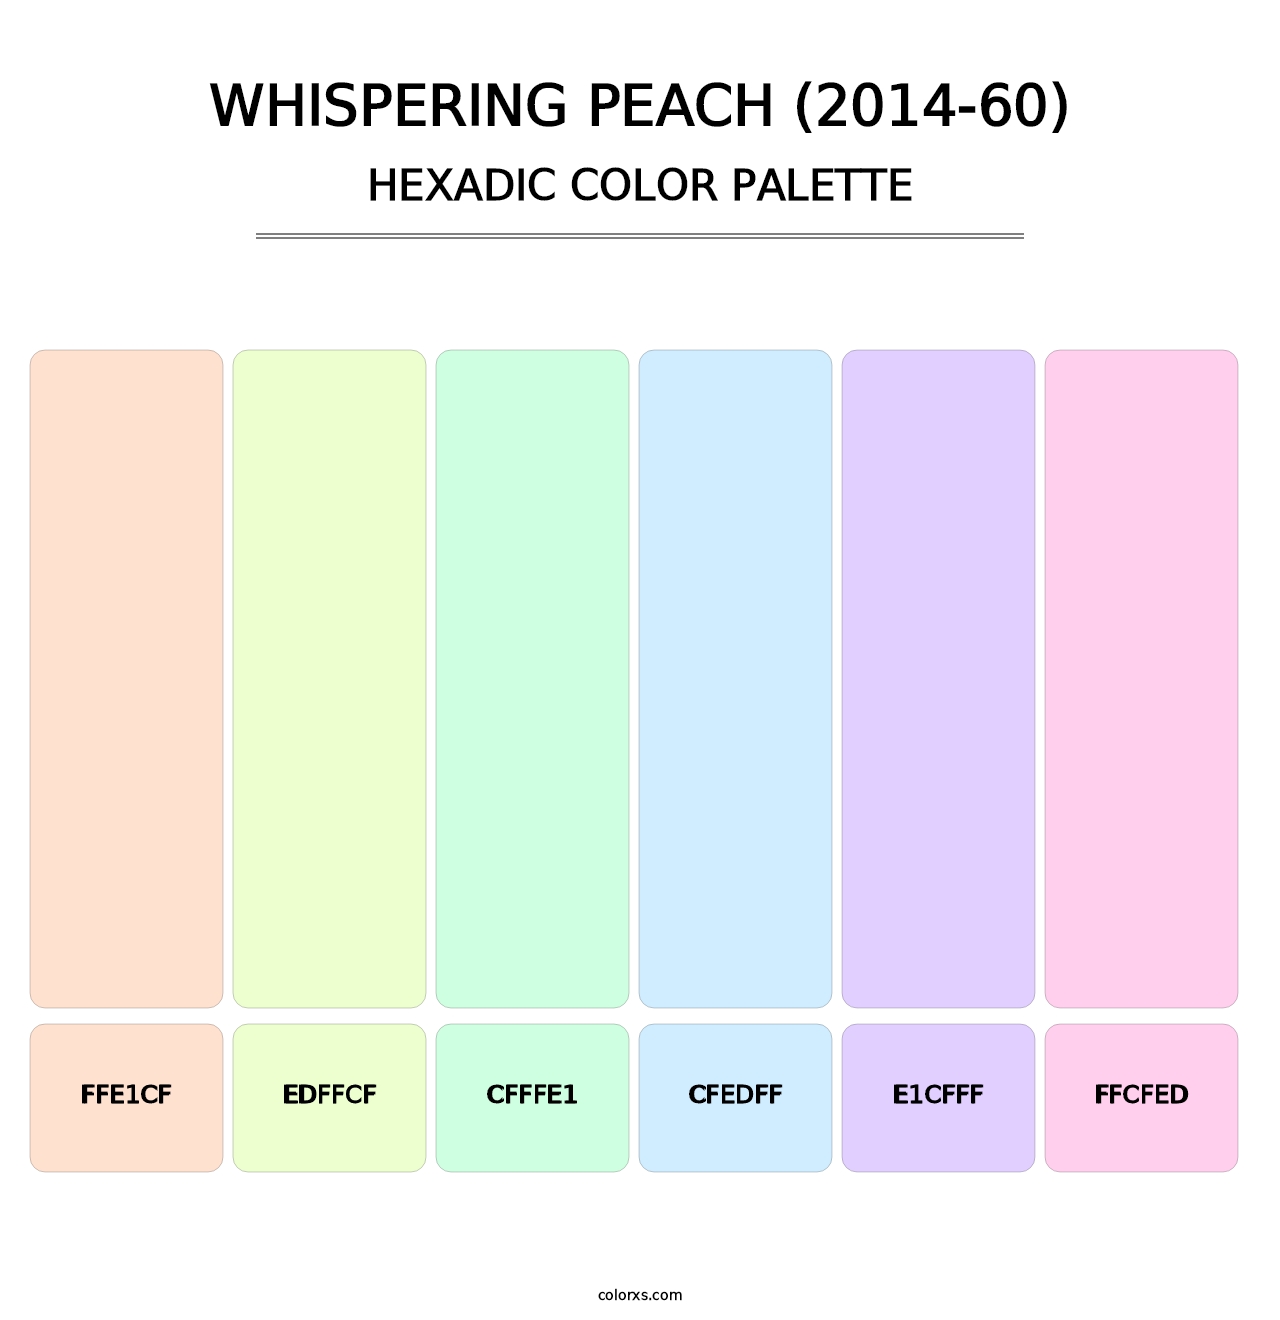 Whispering Peach (2014-60) - Hexadic Color Palette